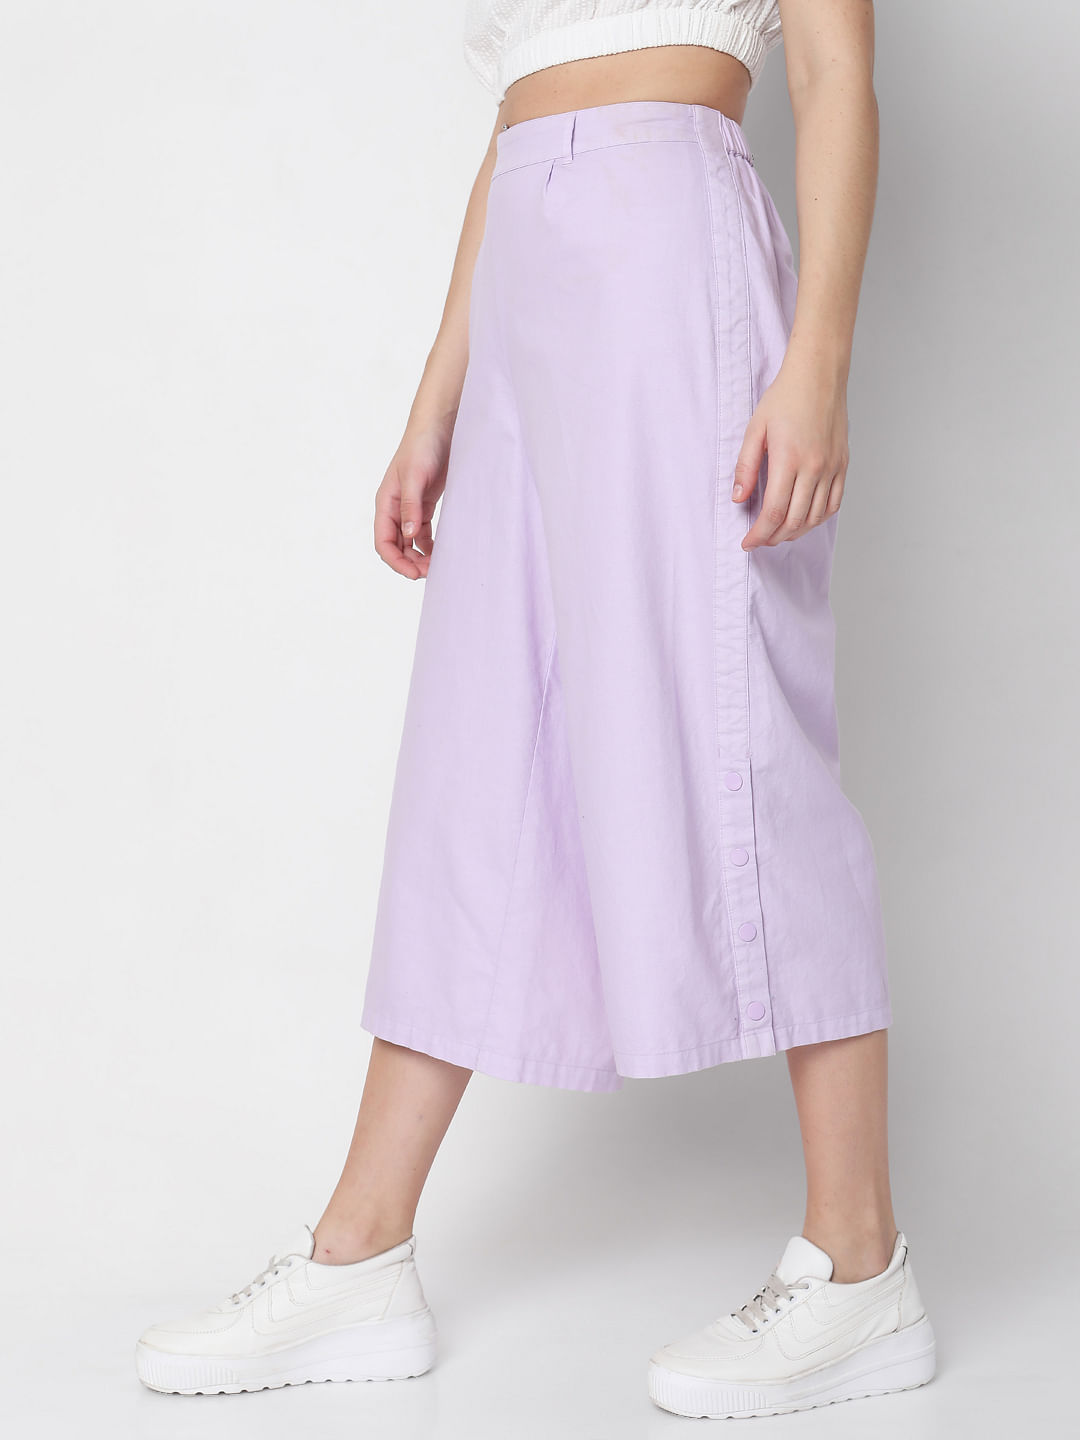 Trousers  Purple  women  894 products  FASHIOLAin